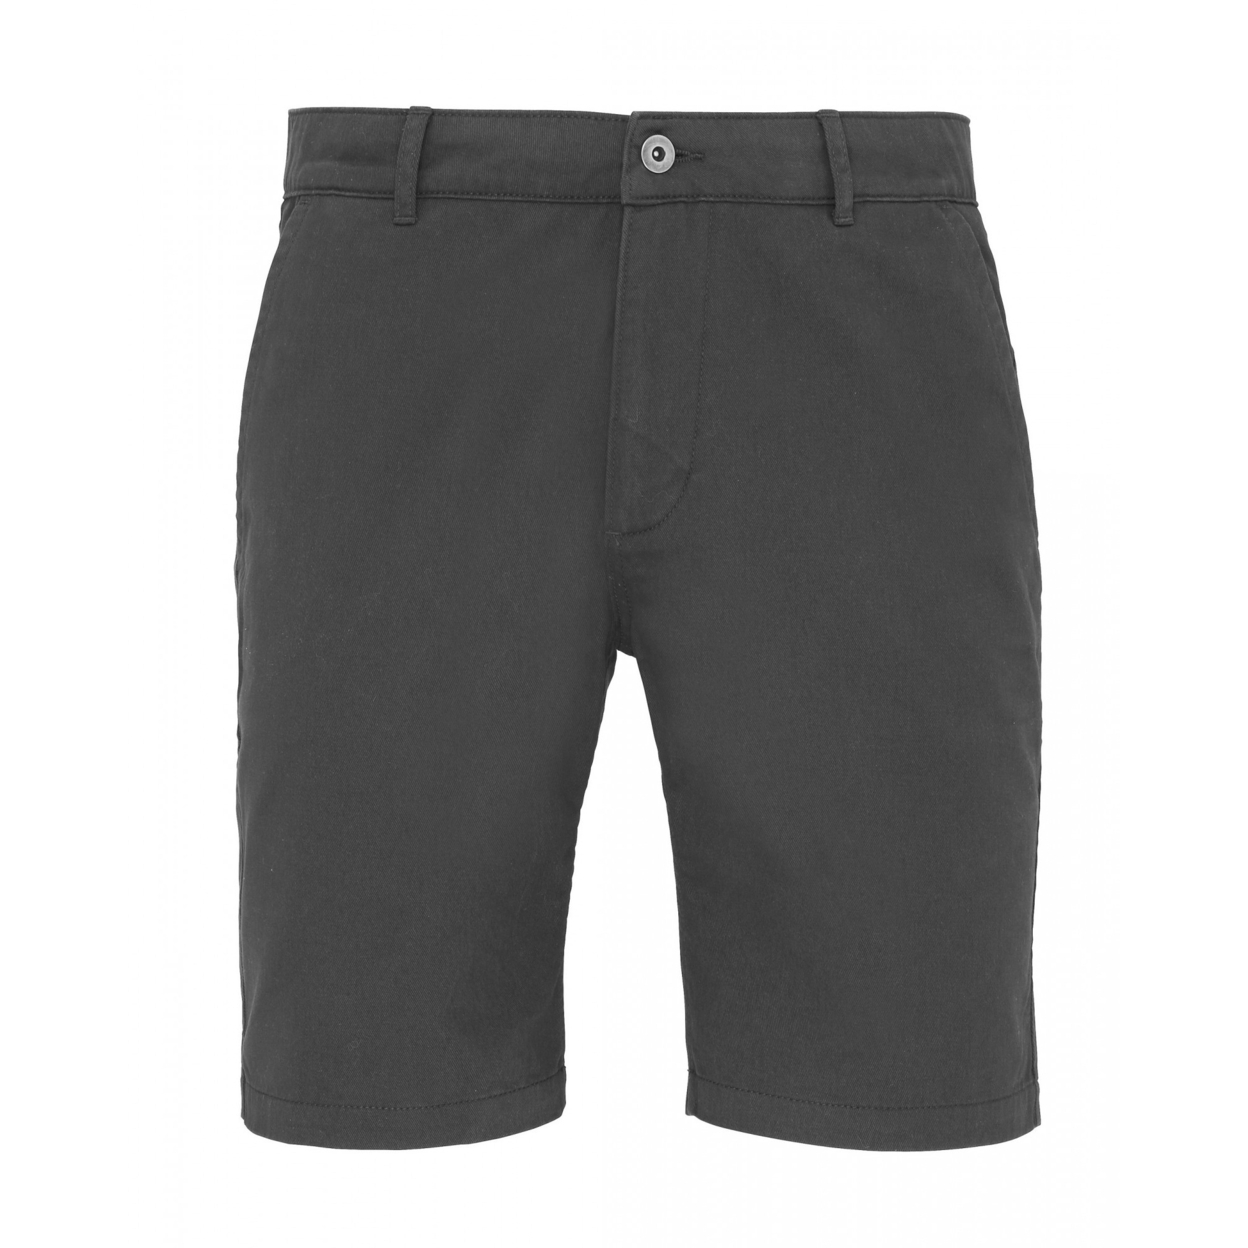 Asquith & Fox Mens Casual Chino Shorts | eBay